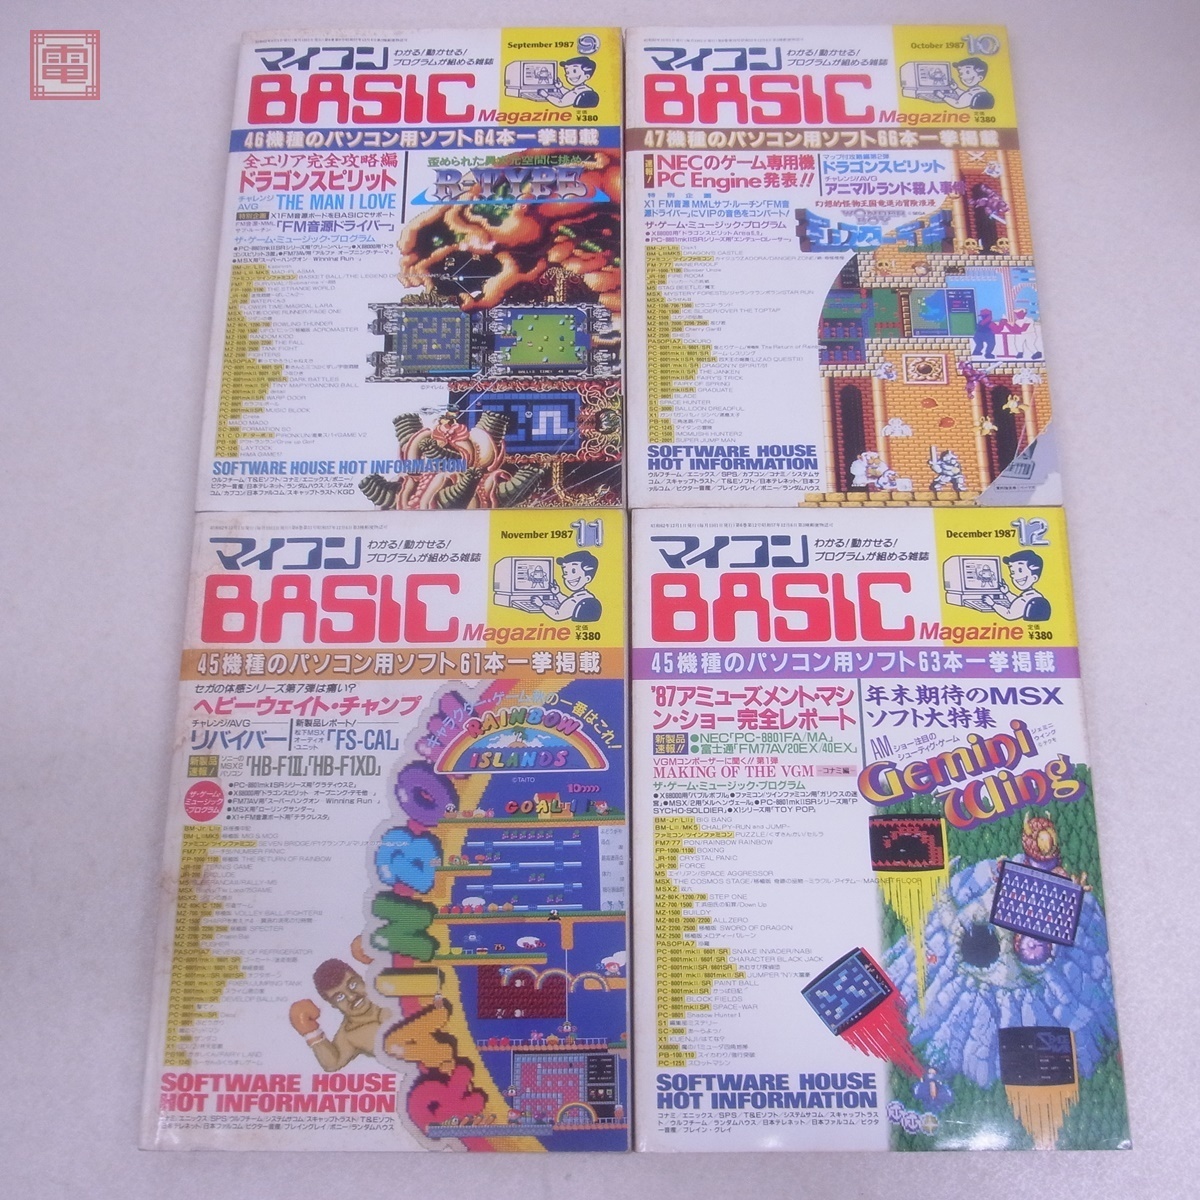  журнал microcomputer BASIC журнал 1987 год Showa 62 год 1 месяц номер ~12 месяц номер итого 12 шт. через год .. беж maga радиоволны газета фирма не осмотр товар [20